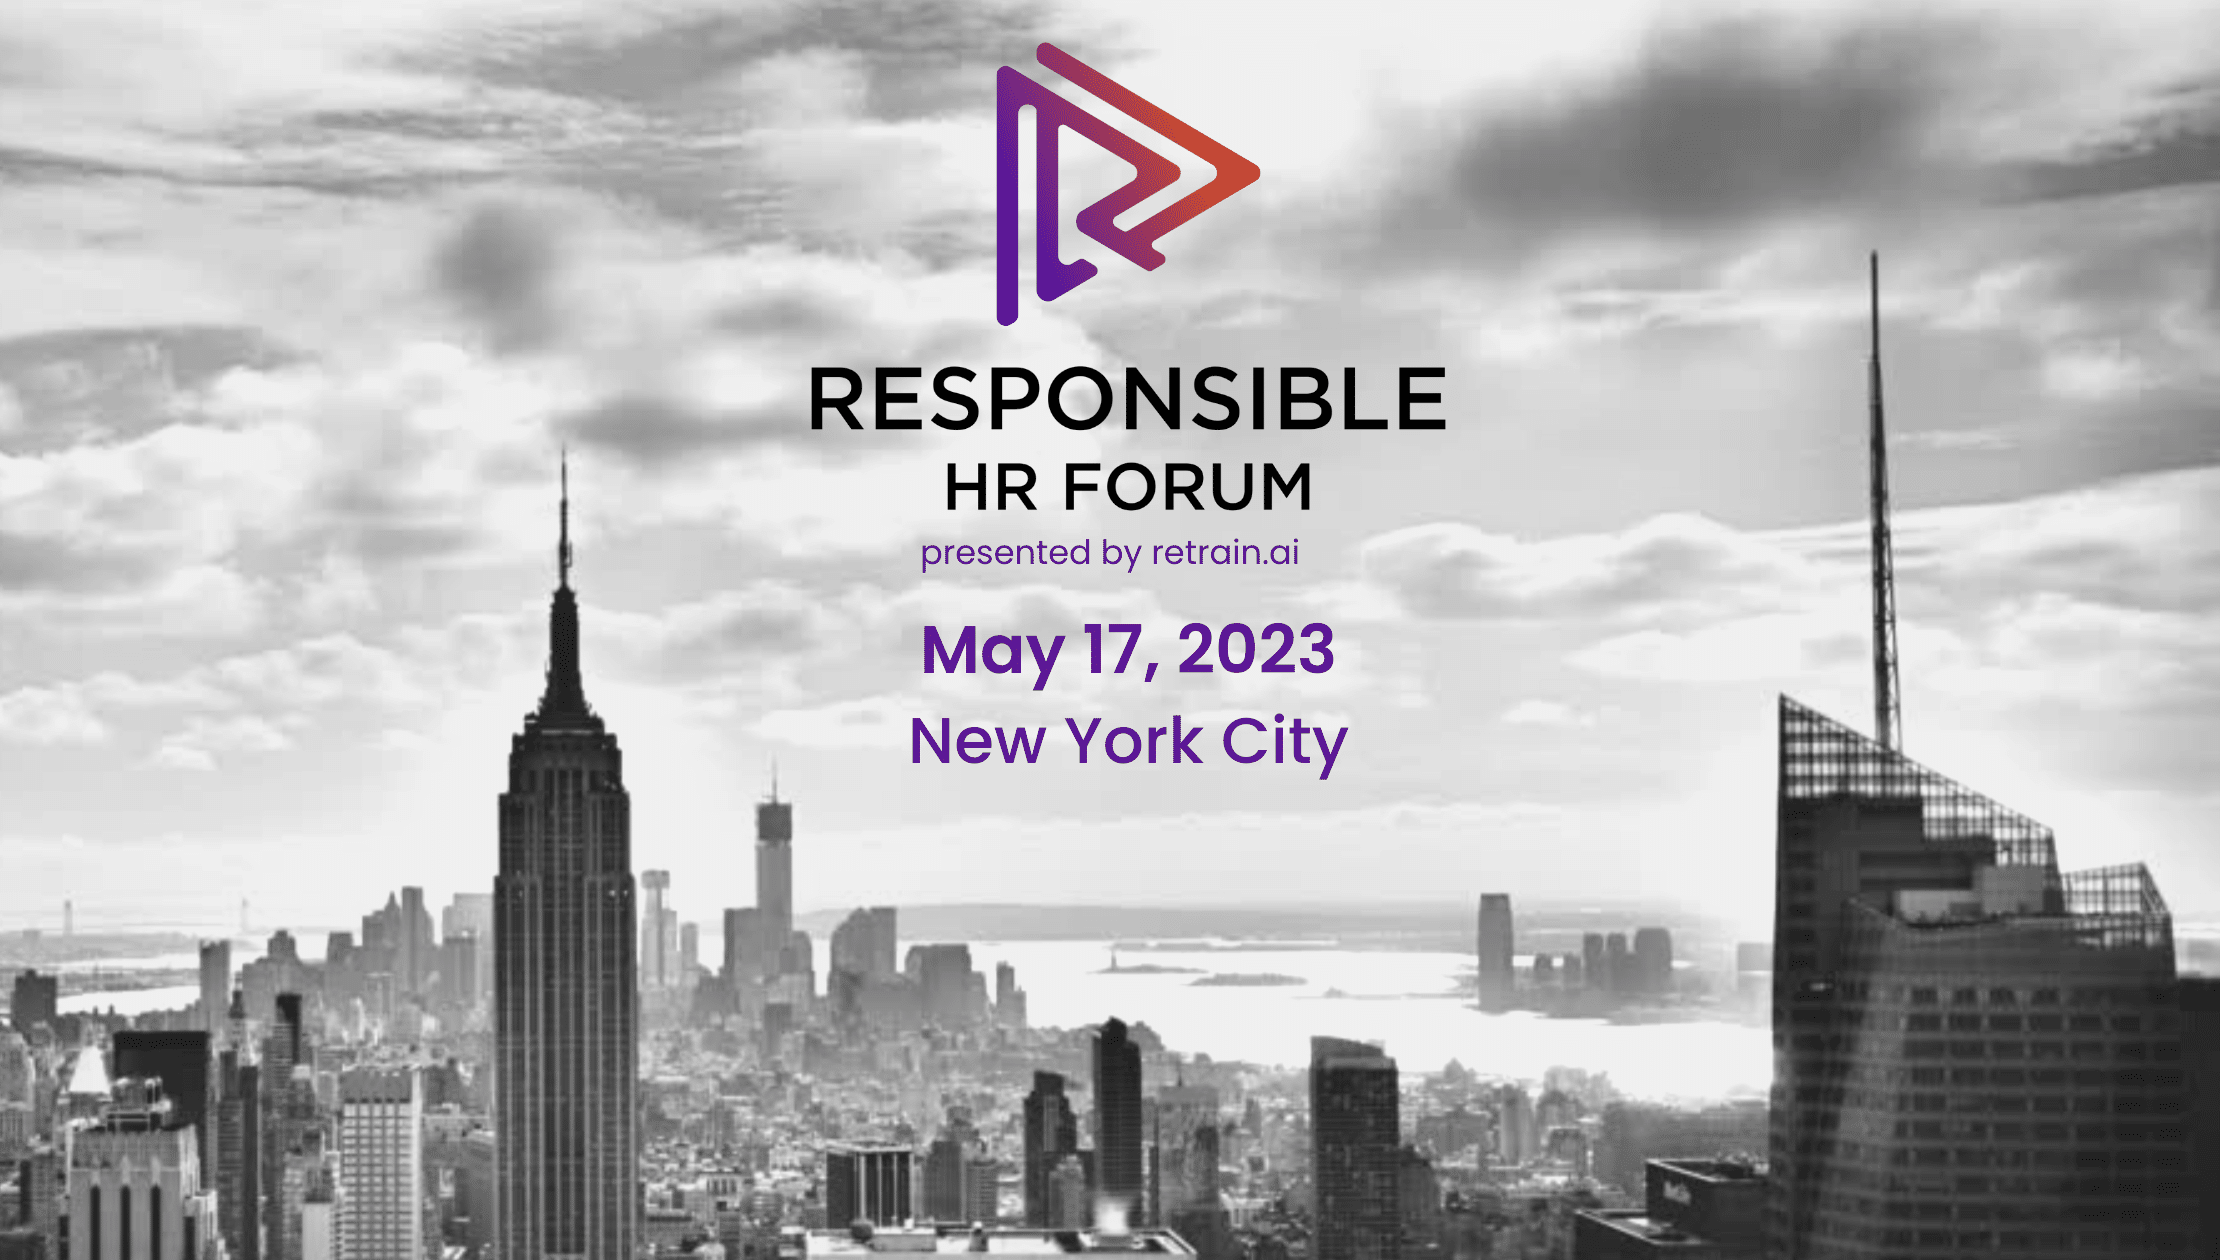 Responsible HR Forum graphic on NYC skyline